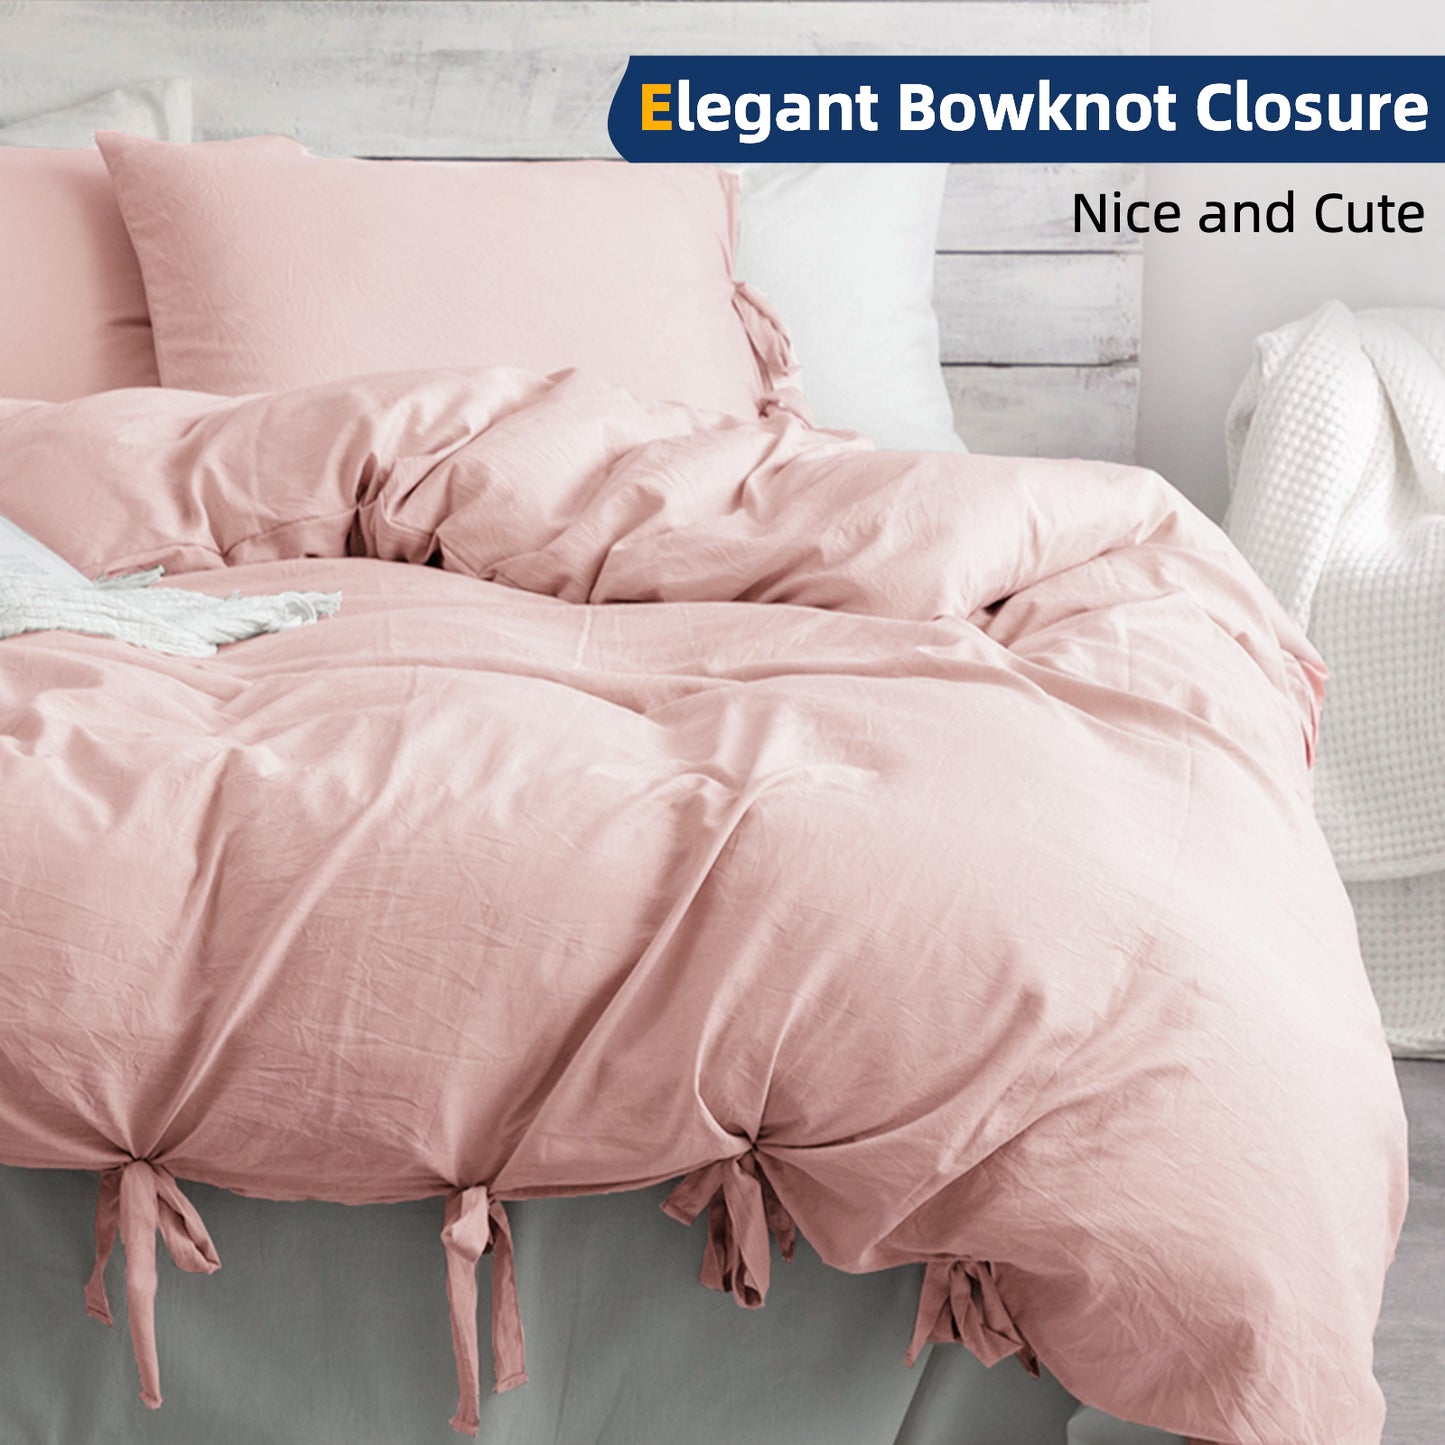 Argstar Bowknot Closure Duvet Cover Set Light Pink Color